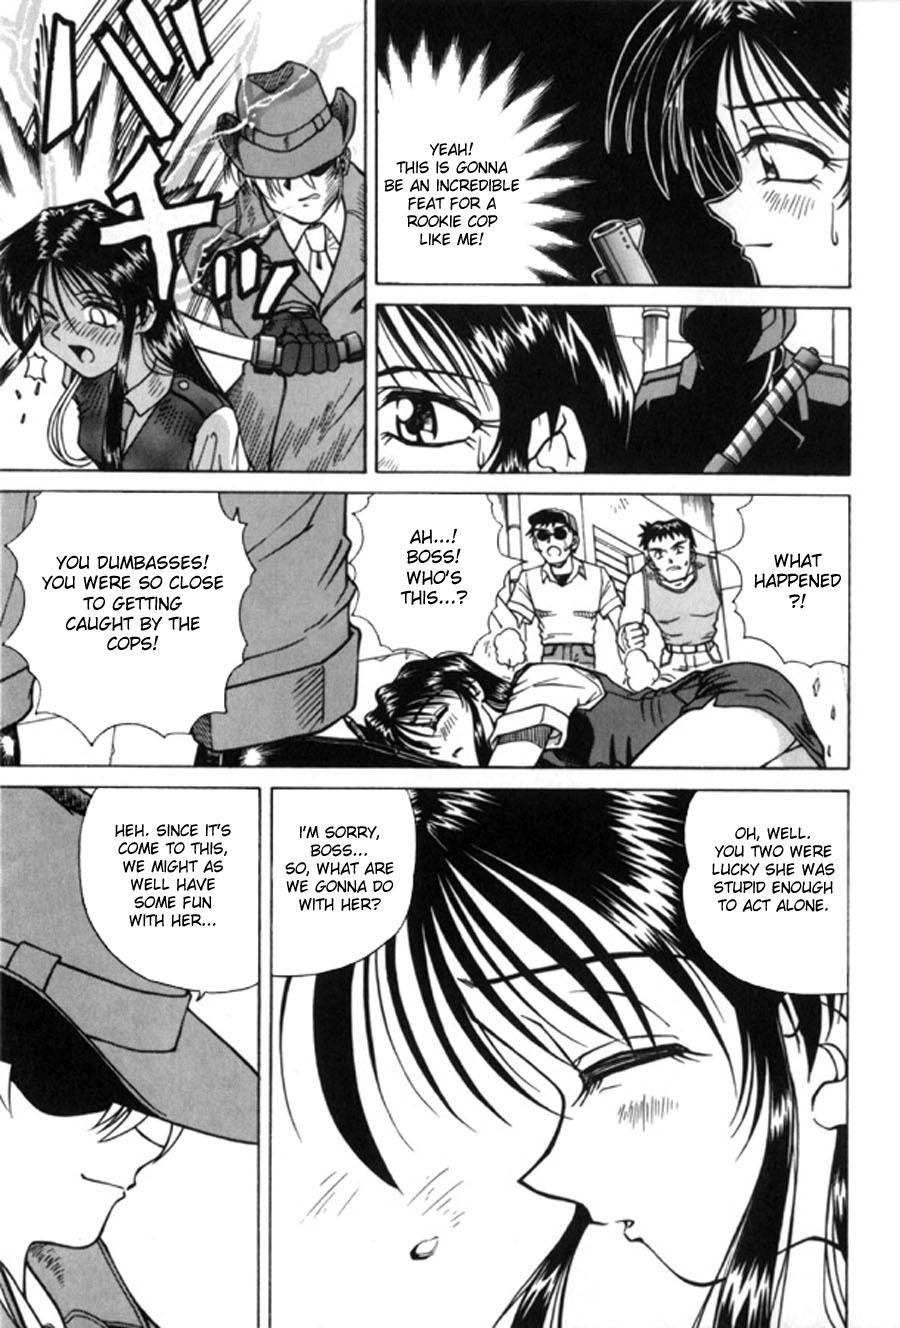 The Suffering of Officer Saki by Spark Utamaro 3